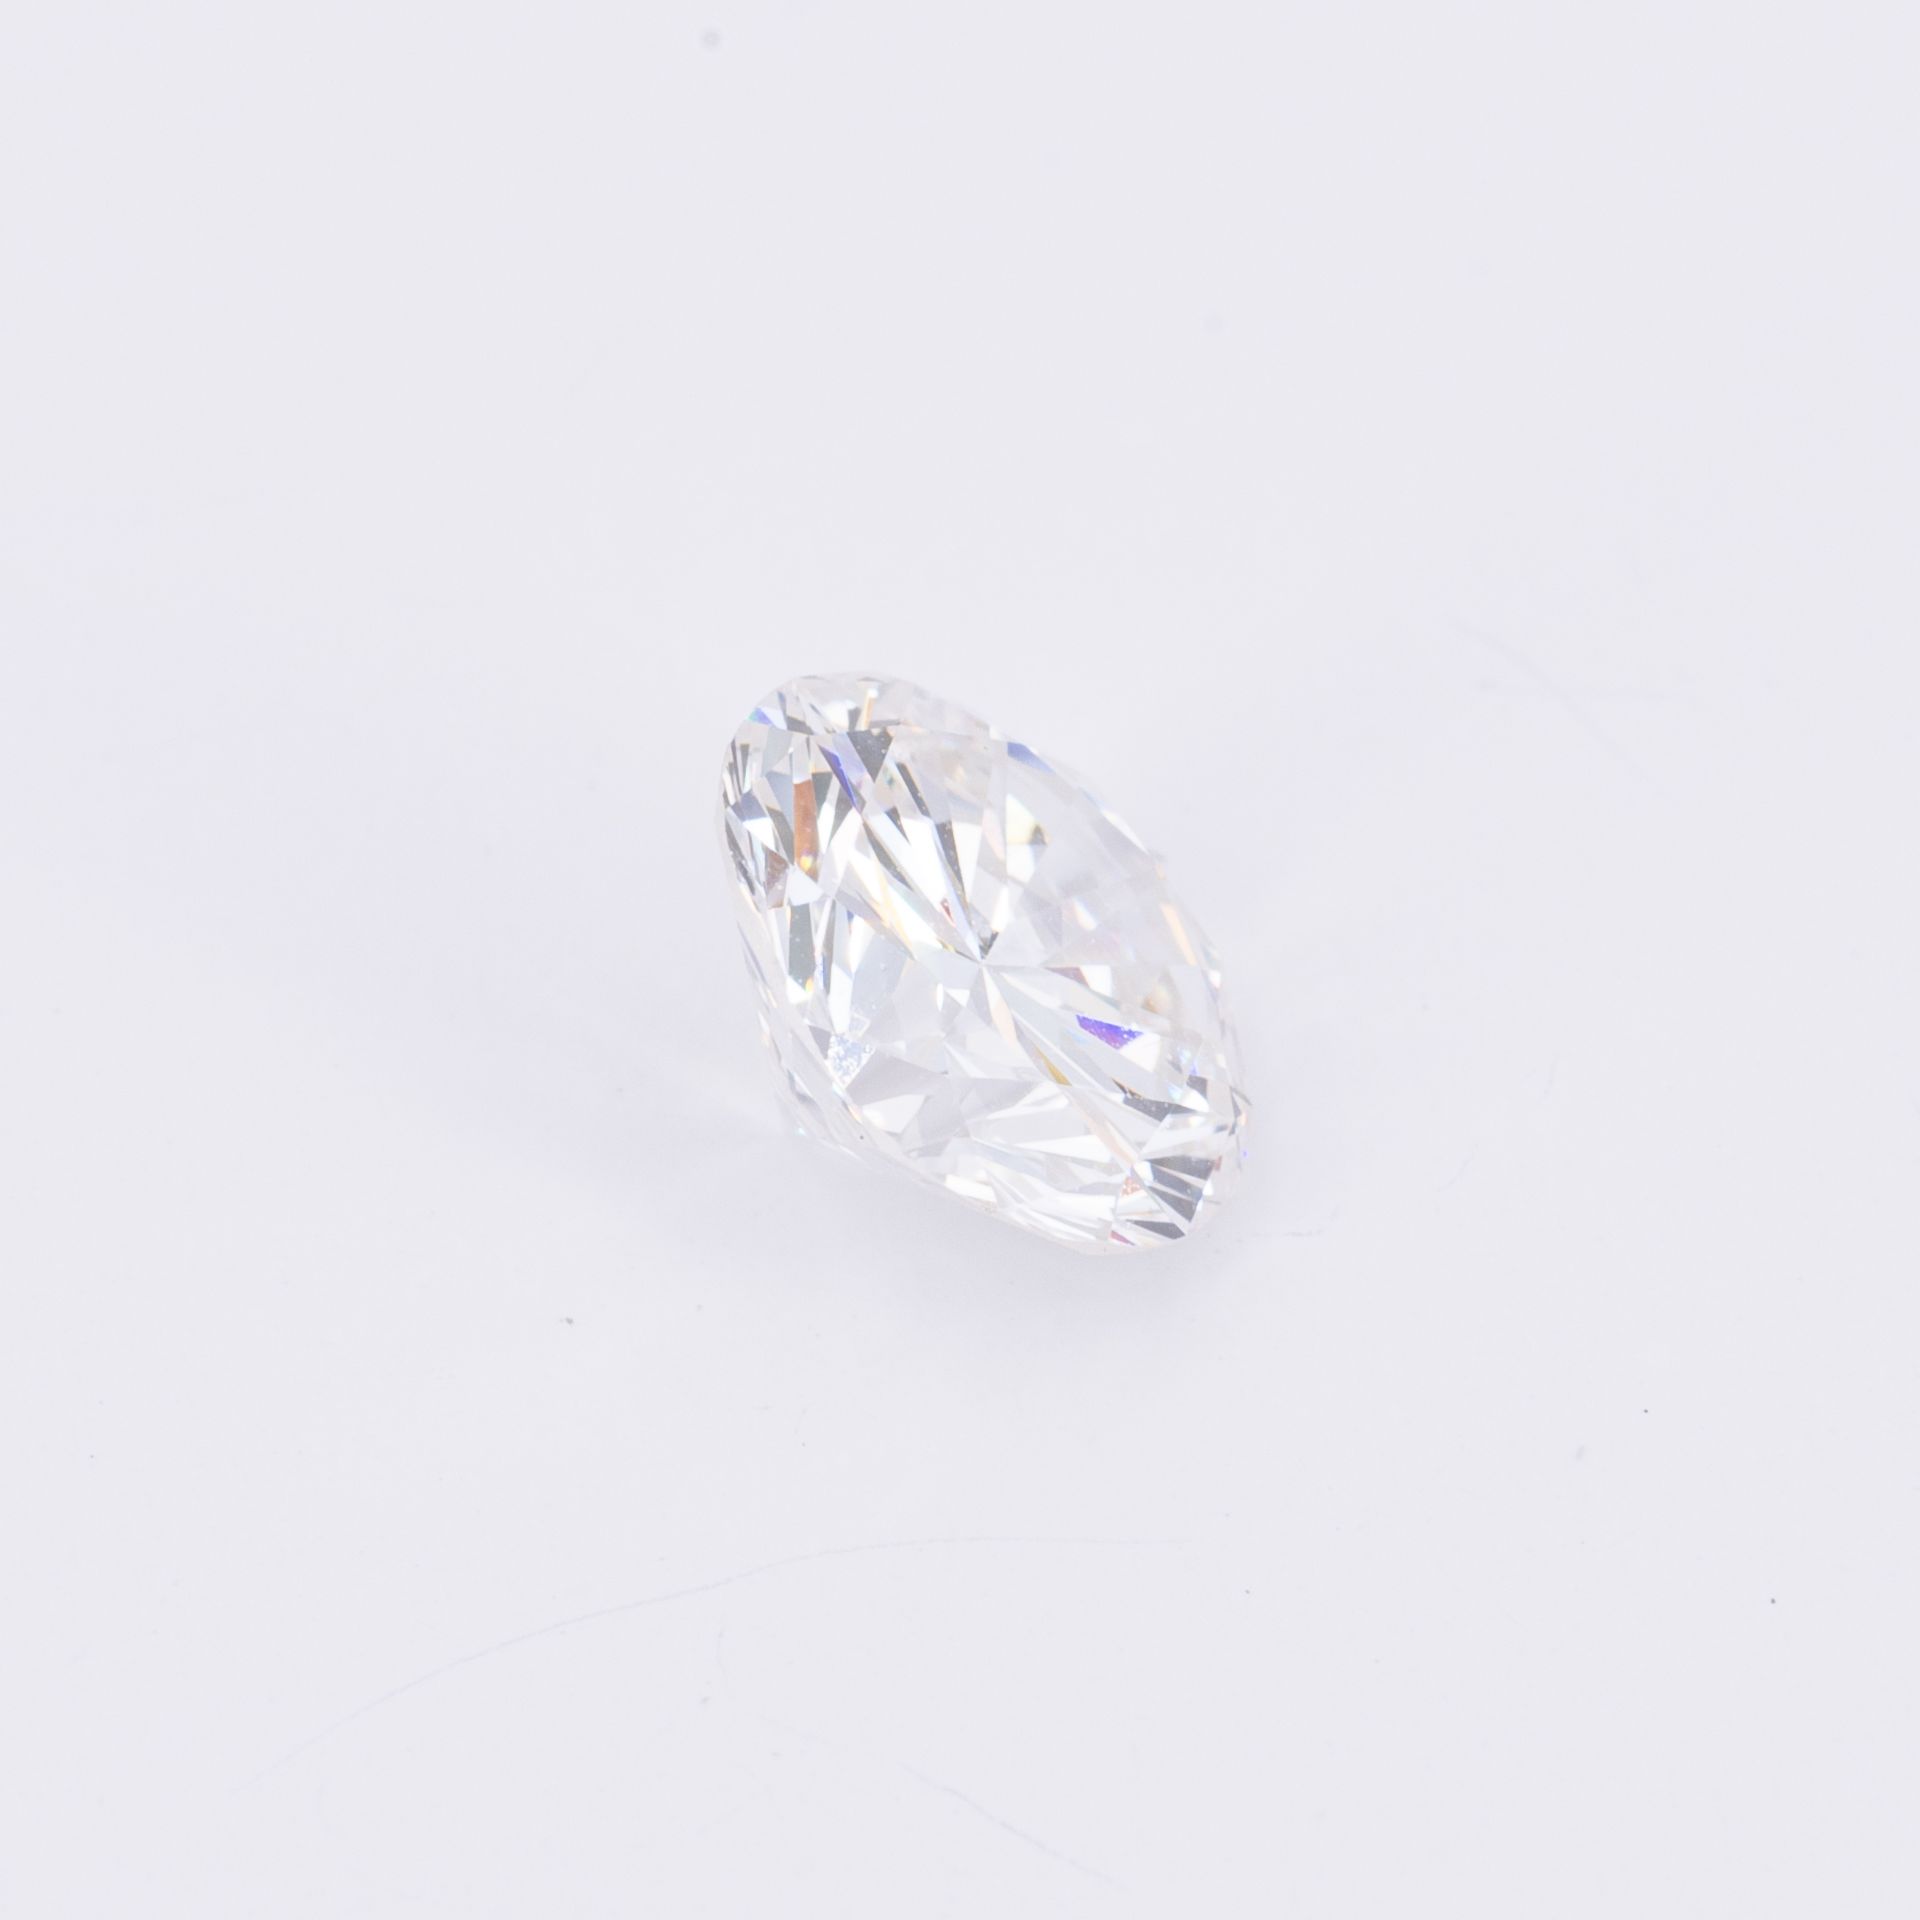 Loose Brilliant-Cut Diamond - Image 2 of 4